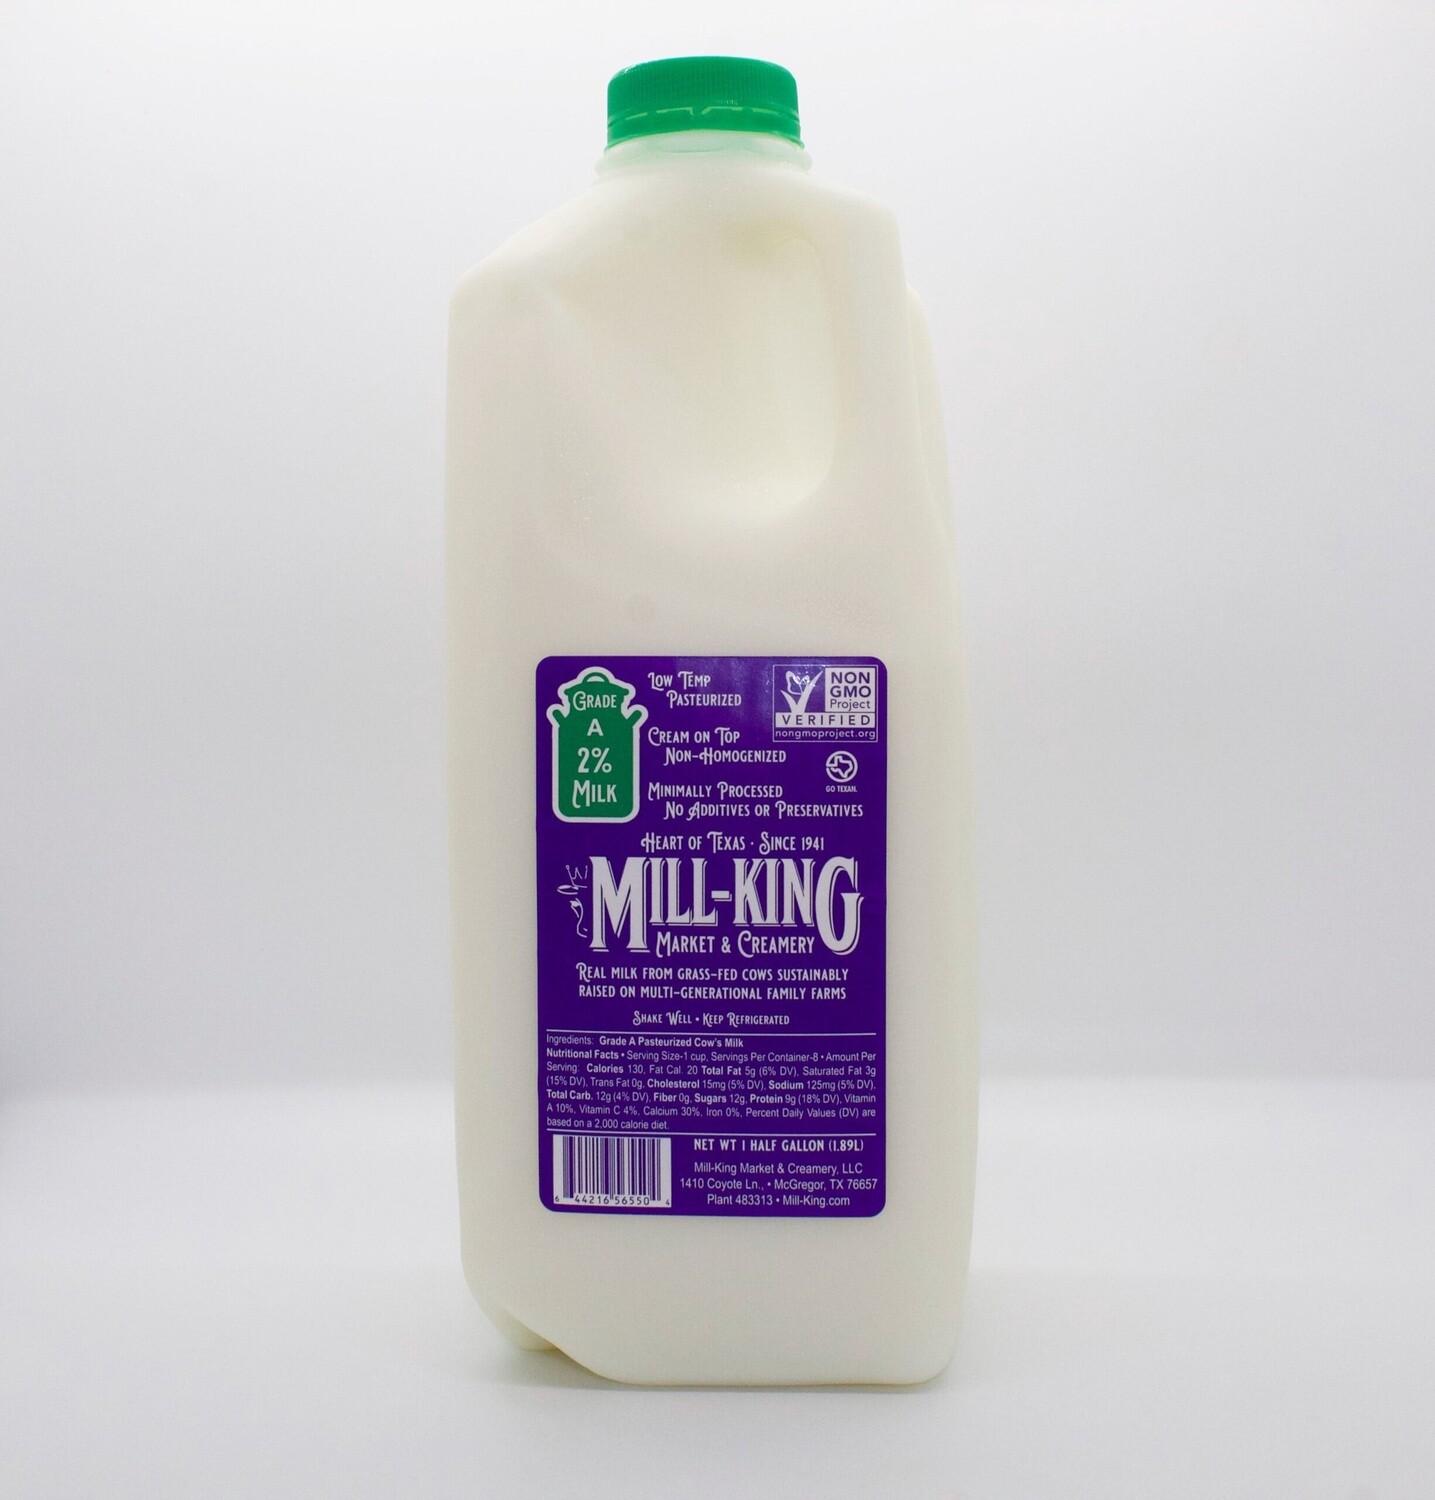 Milk 1% Gallon - Mill King, Flavor: Gallon 1 %